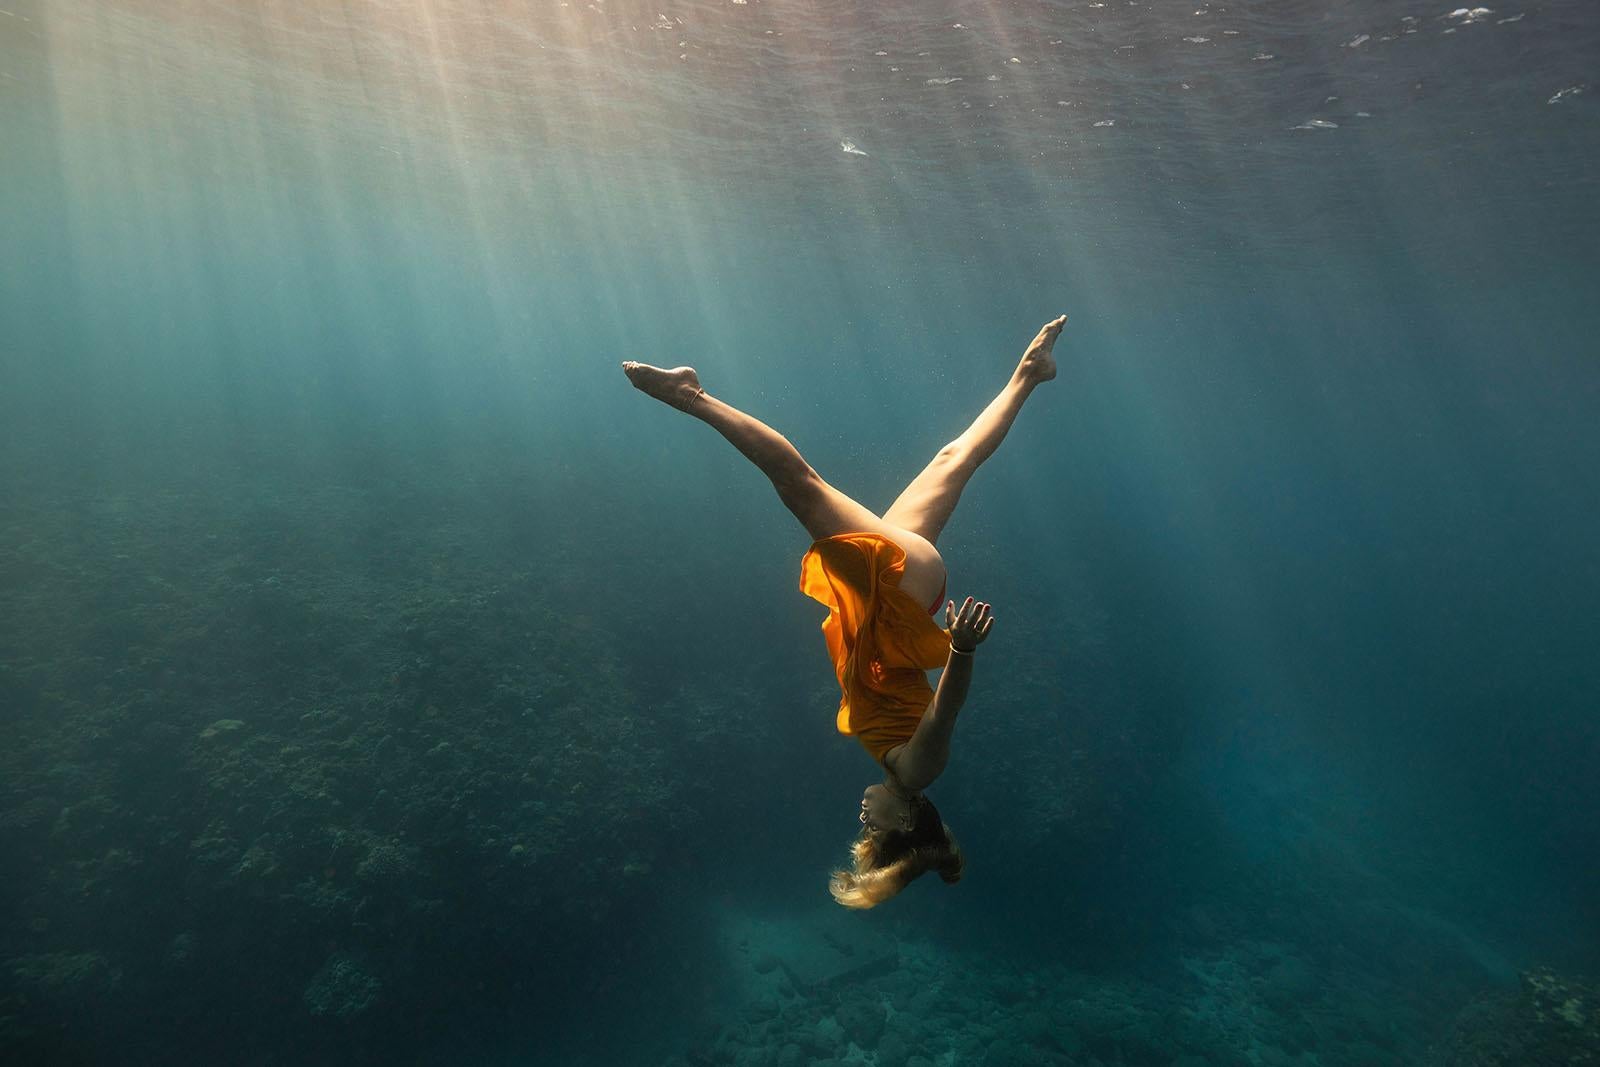 Color Photograph Olivier Borde - Grande photo en couleur « Synchronised swimming in the Blue » (Plonger dans le bleu) - Impression d'art